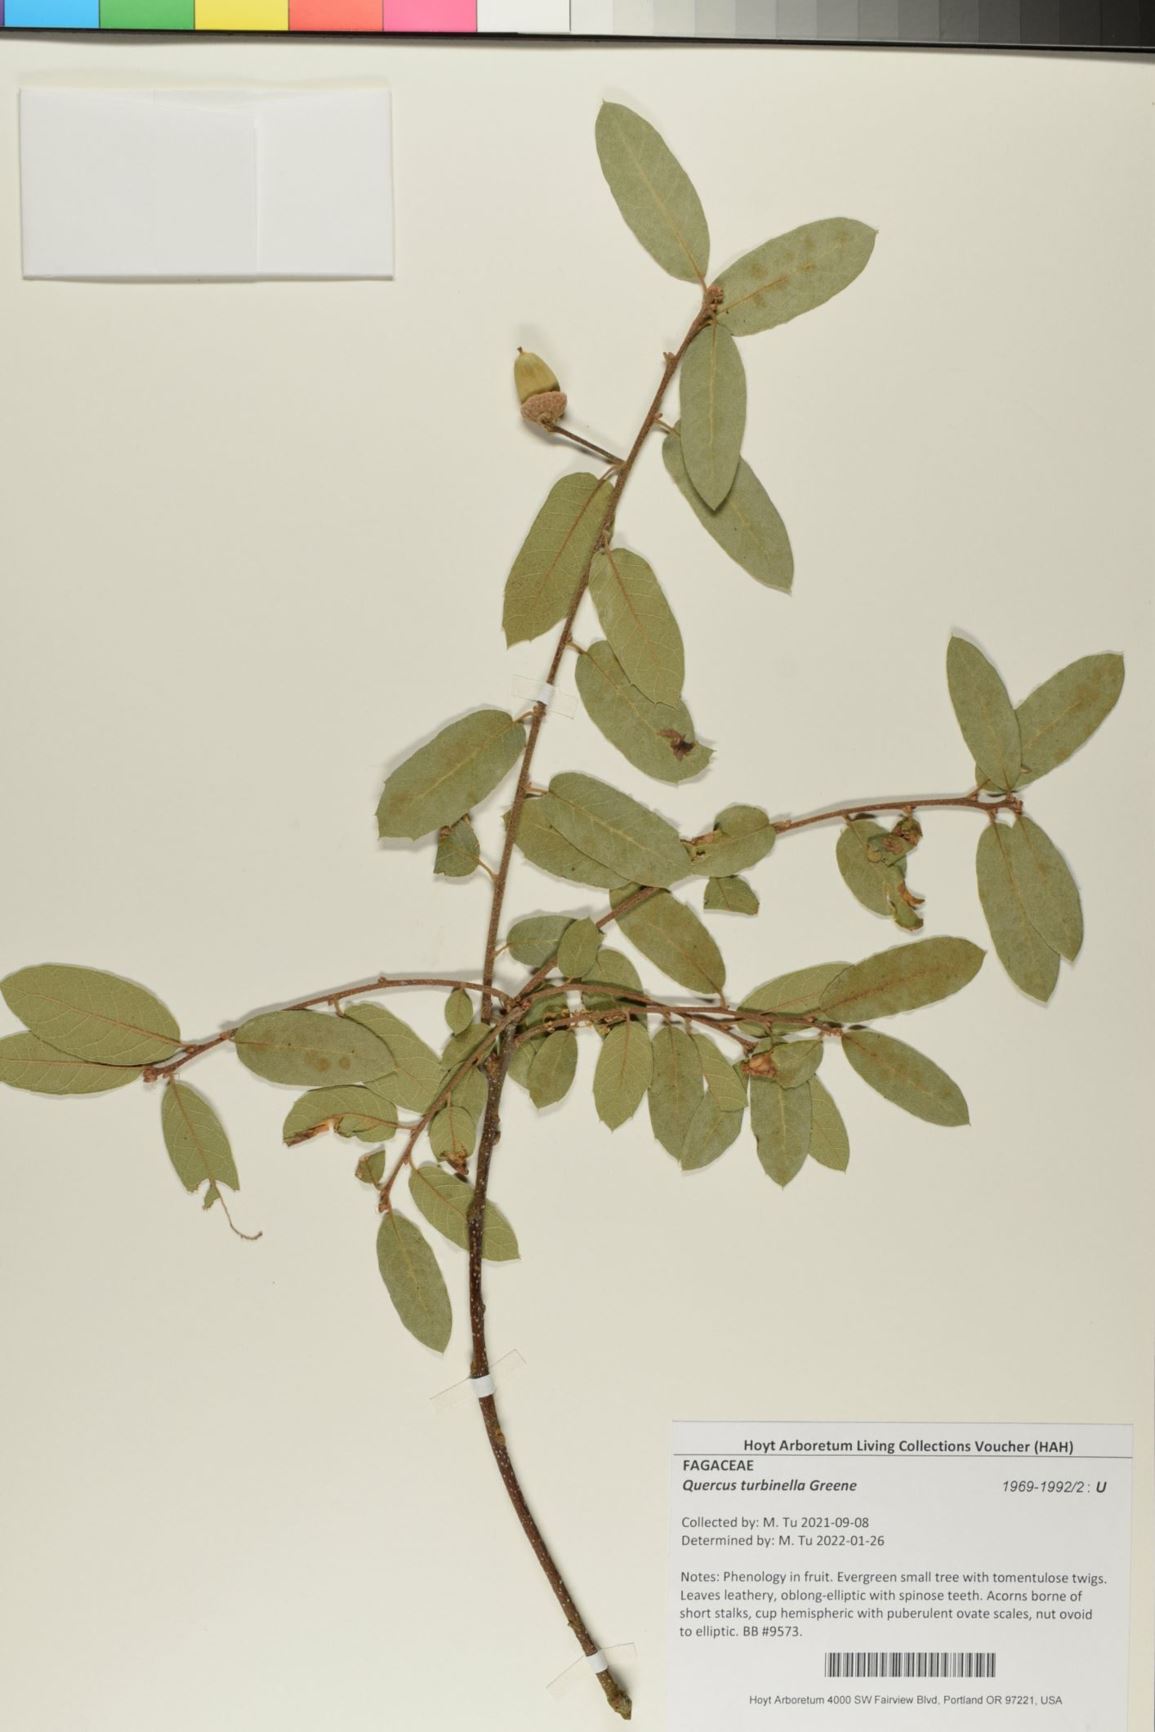 Quercus turbinella - Shrub Live Oak, turbinella oak, scrub oak, Sonoran scrub oak